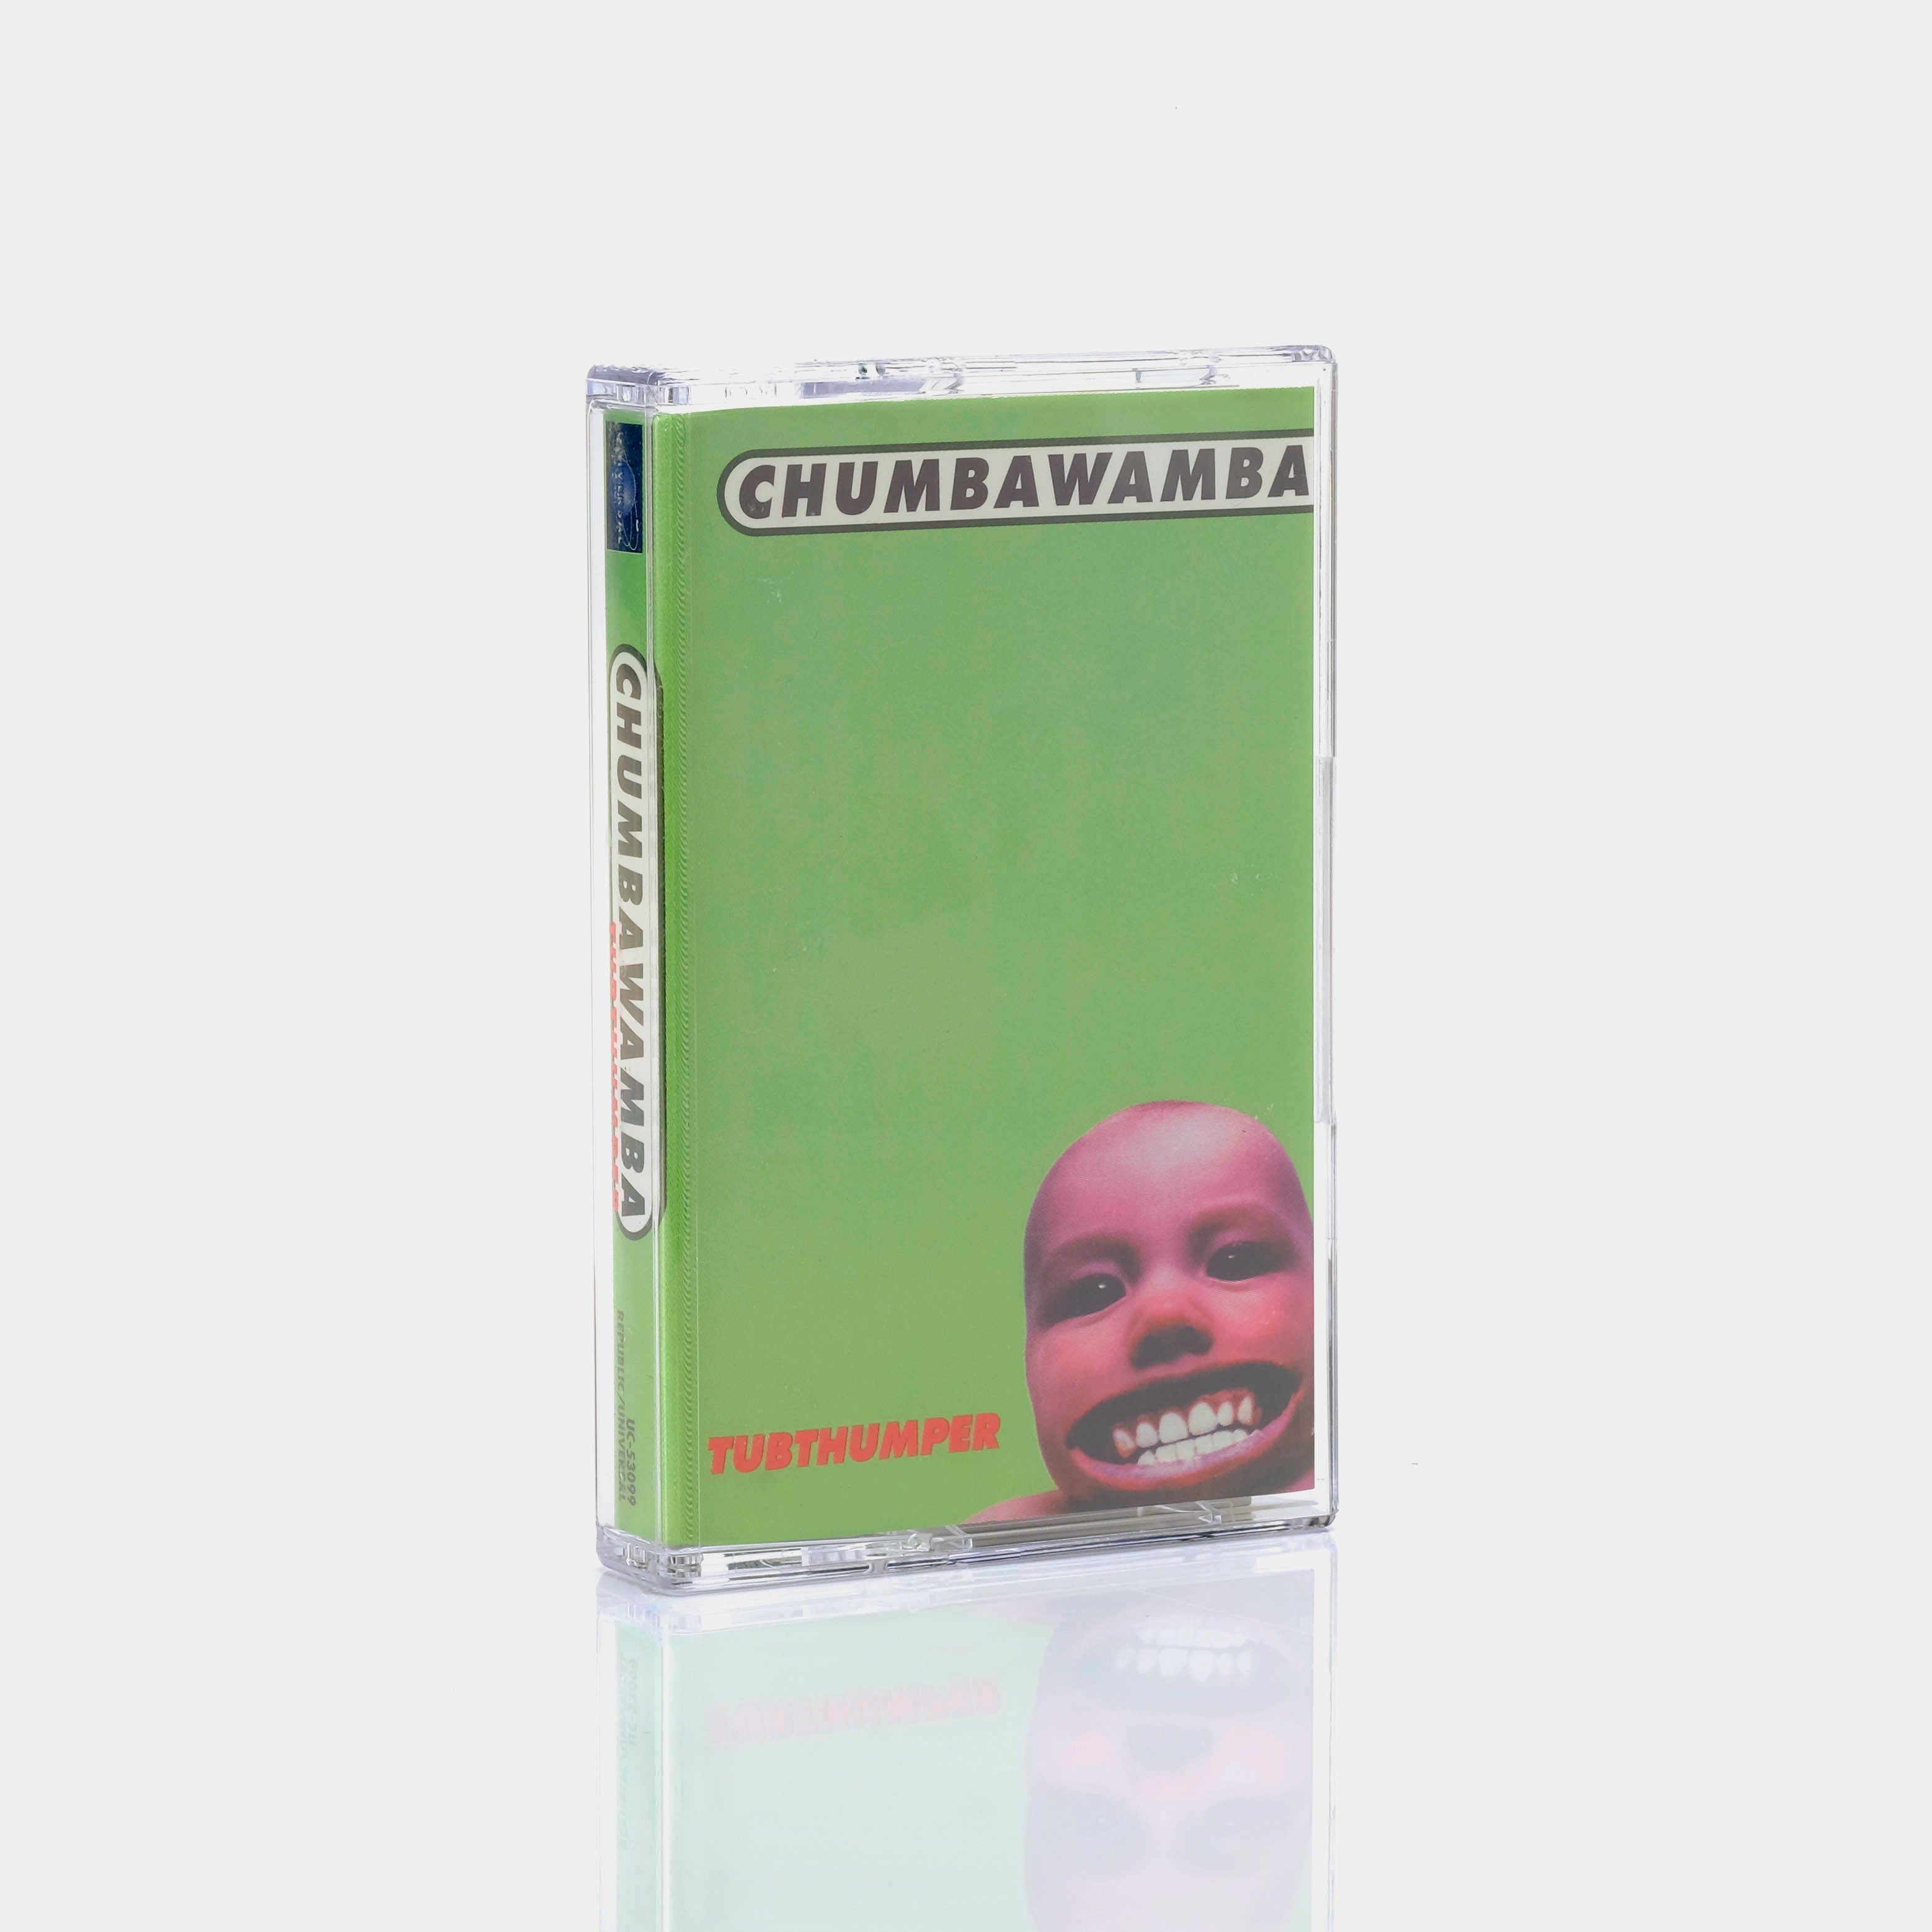 ChumbaWamba - Tubthumper Cassette Tape